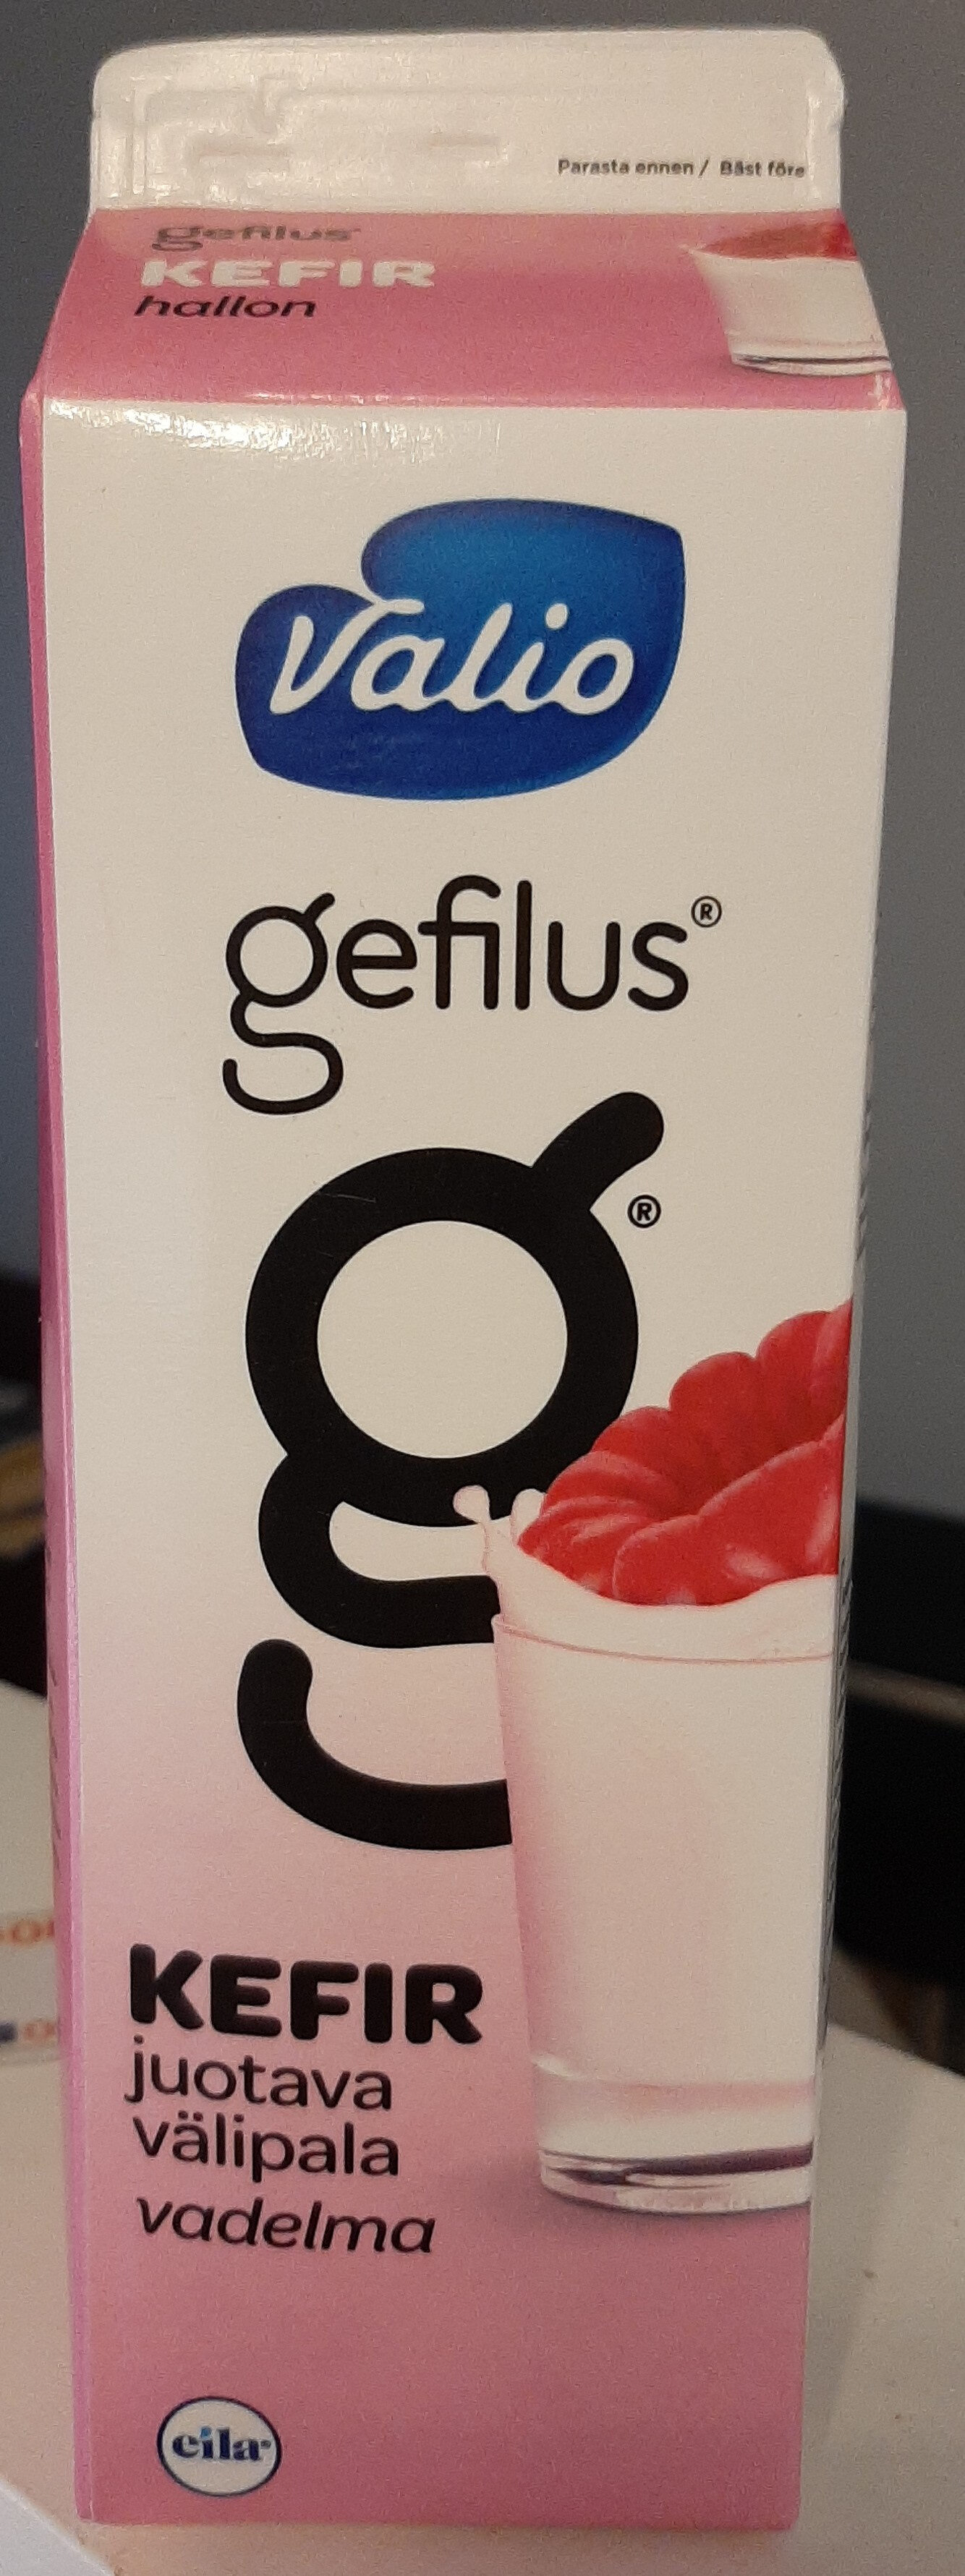 Gefilus Kefir juotava välipala vadelma - Tuote - fi